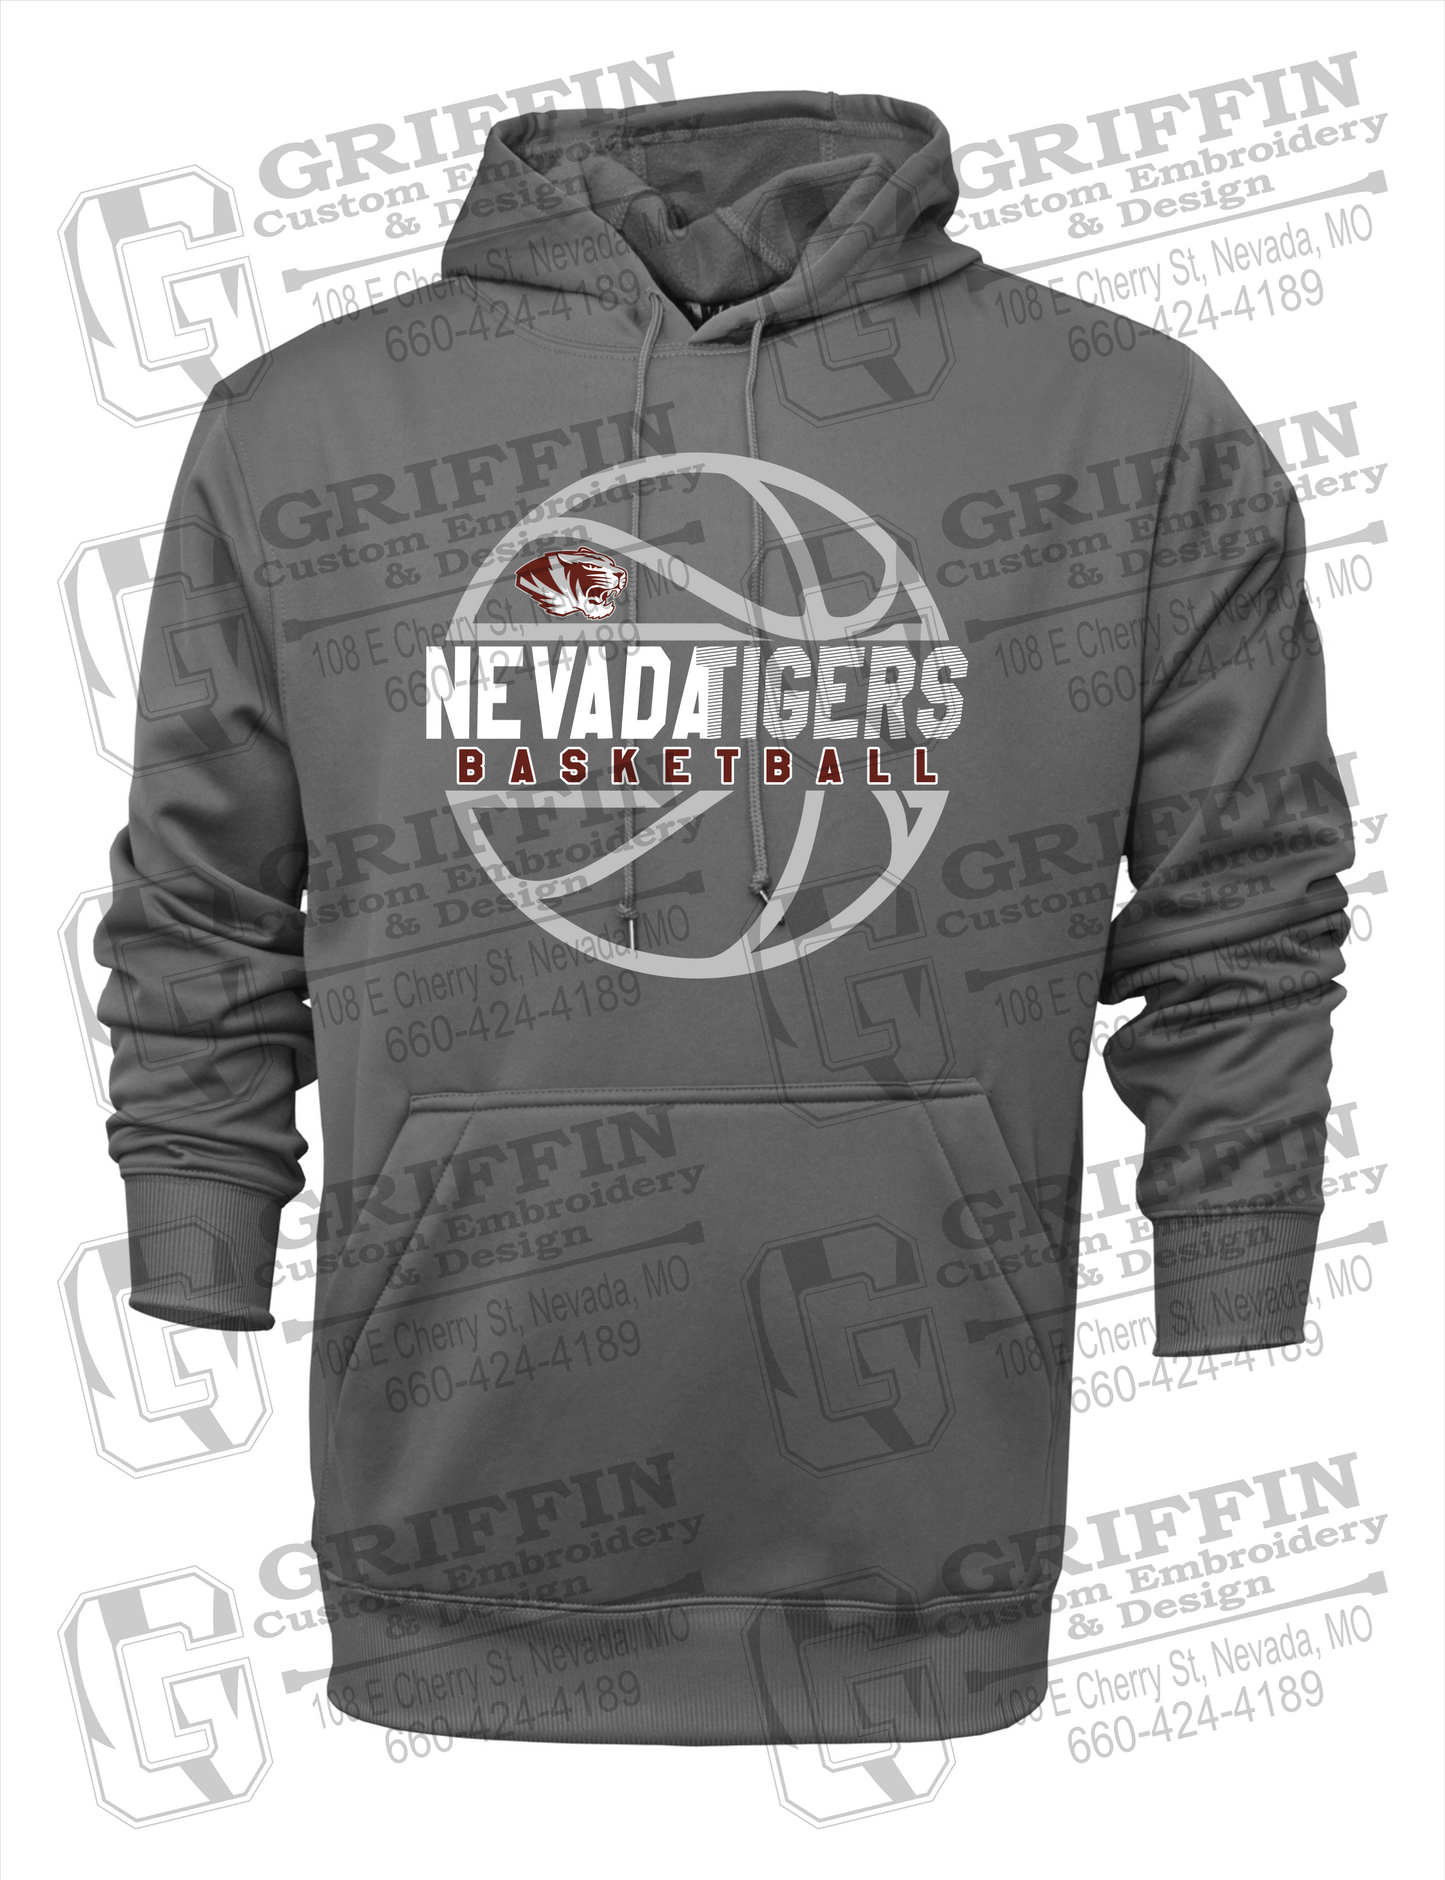 Nevada Tigers 19-V Youth Hoodie - Basketball